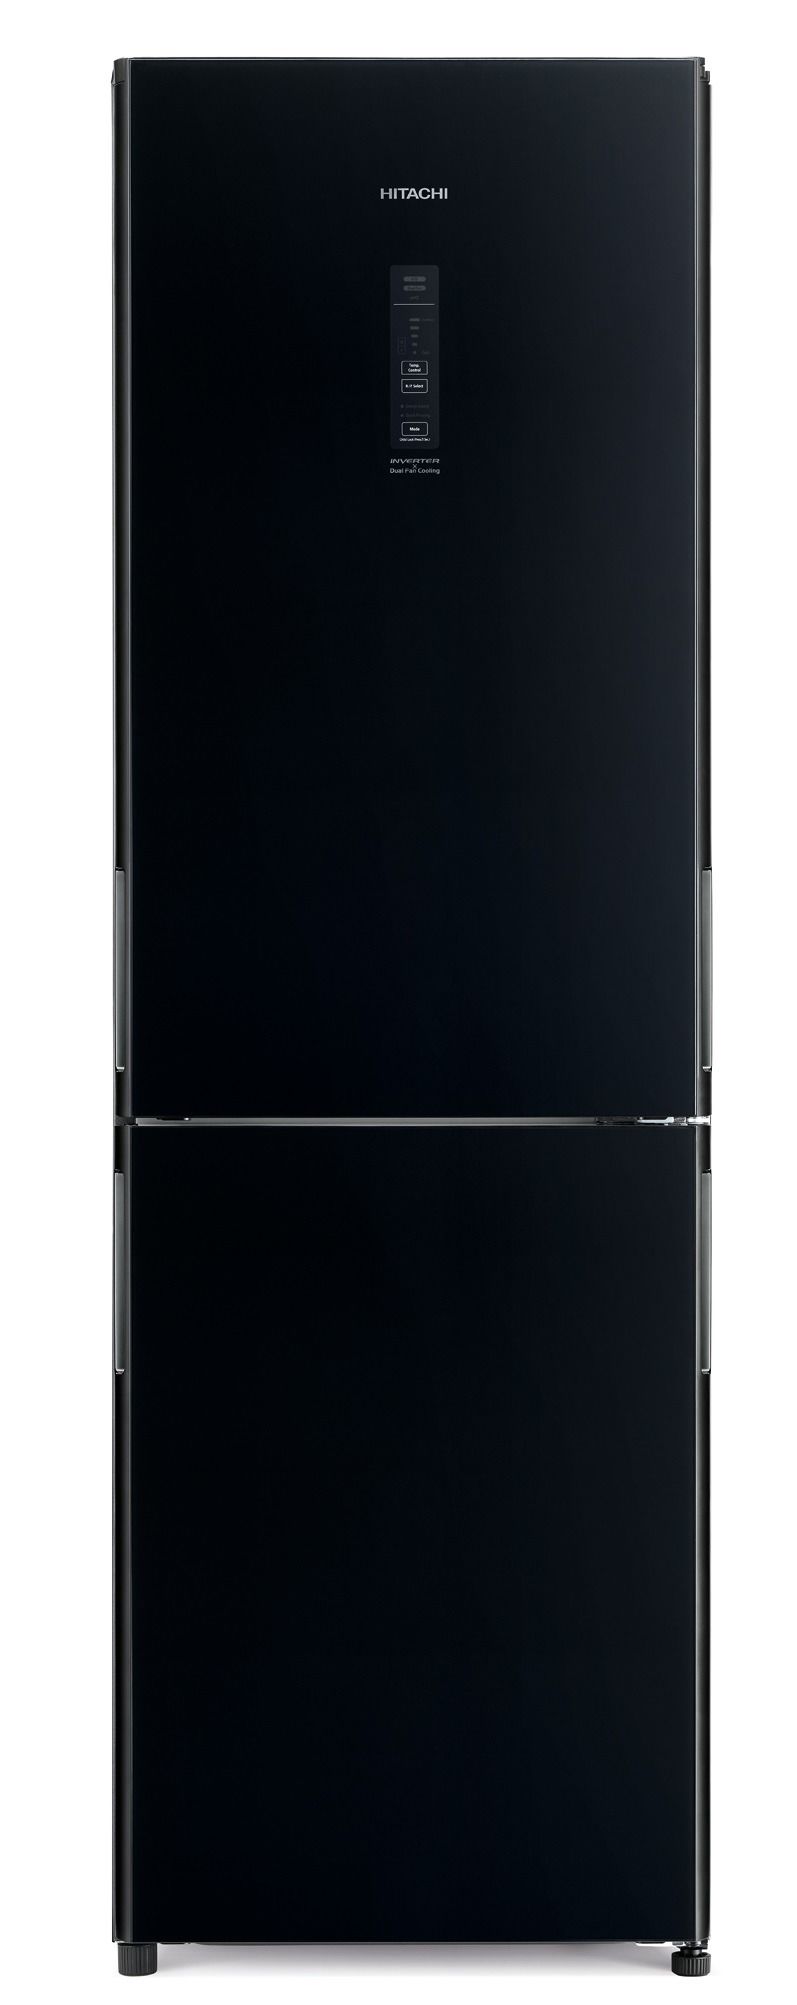 Hitachi RBG410PUK6XGBK 410L Bottom Freezer, Black